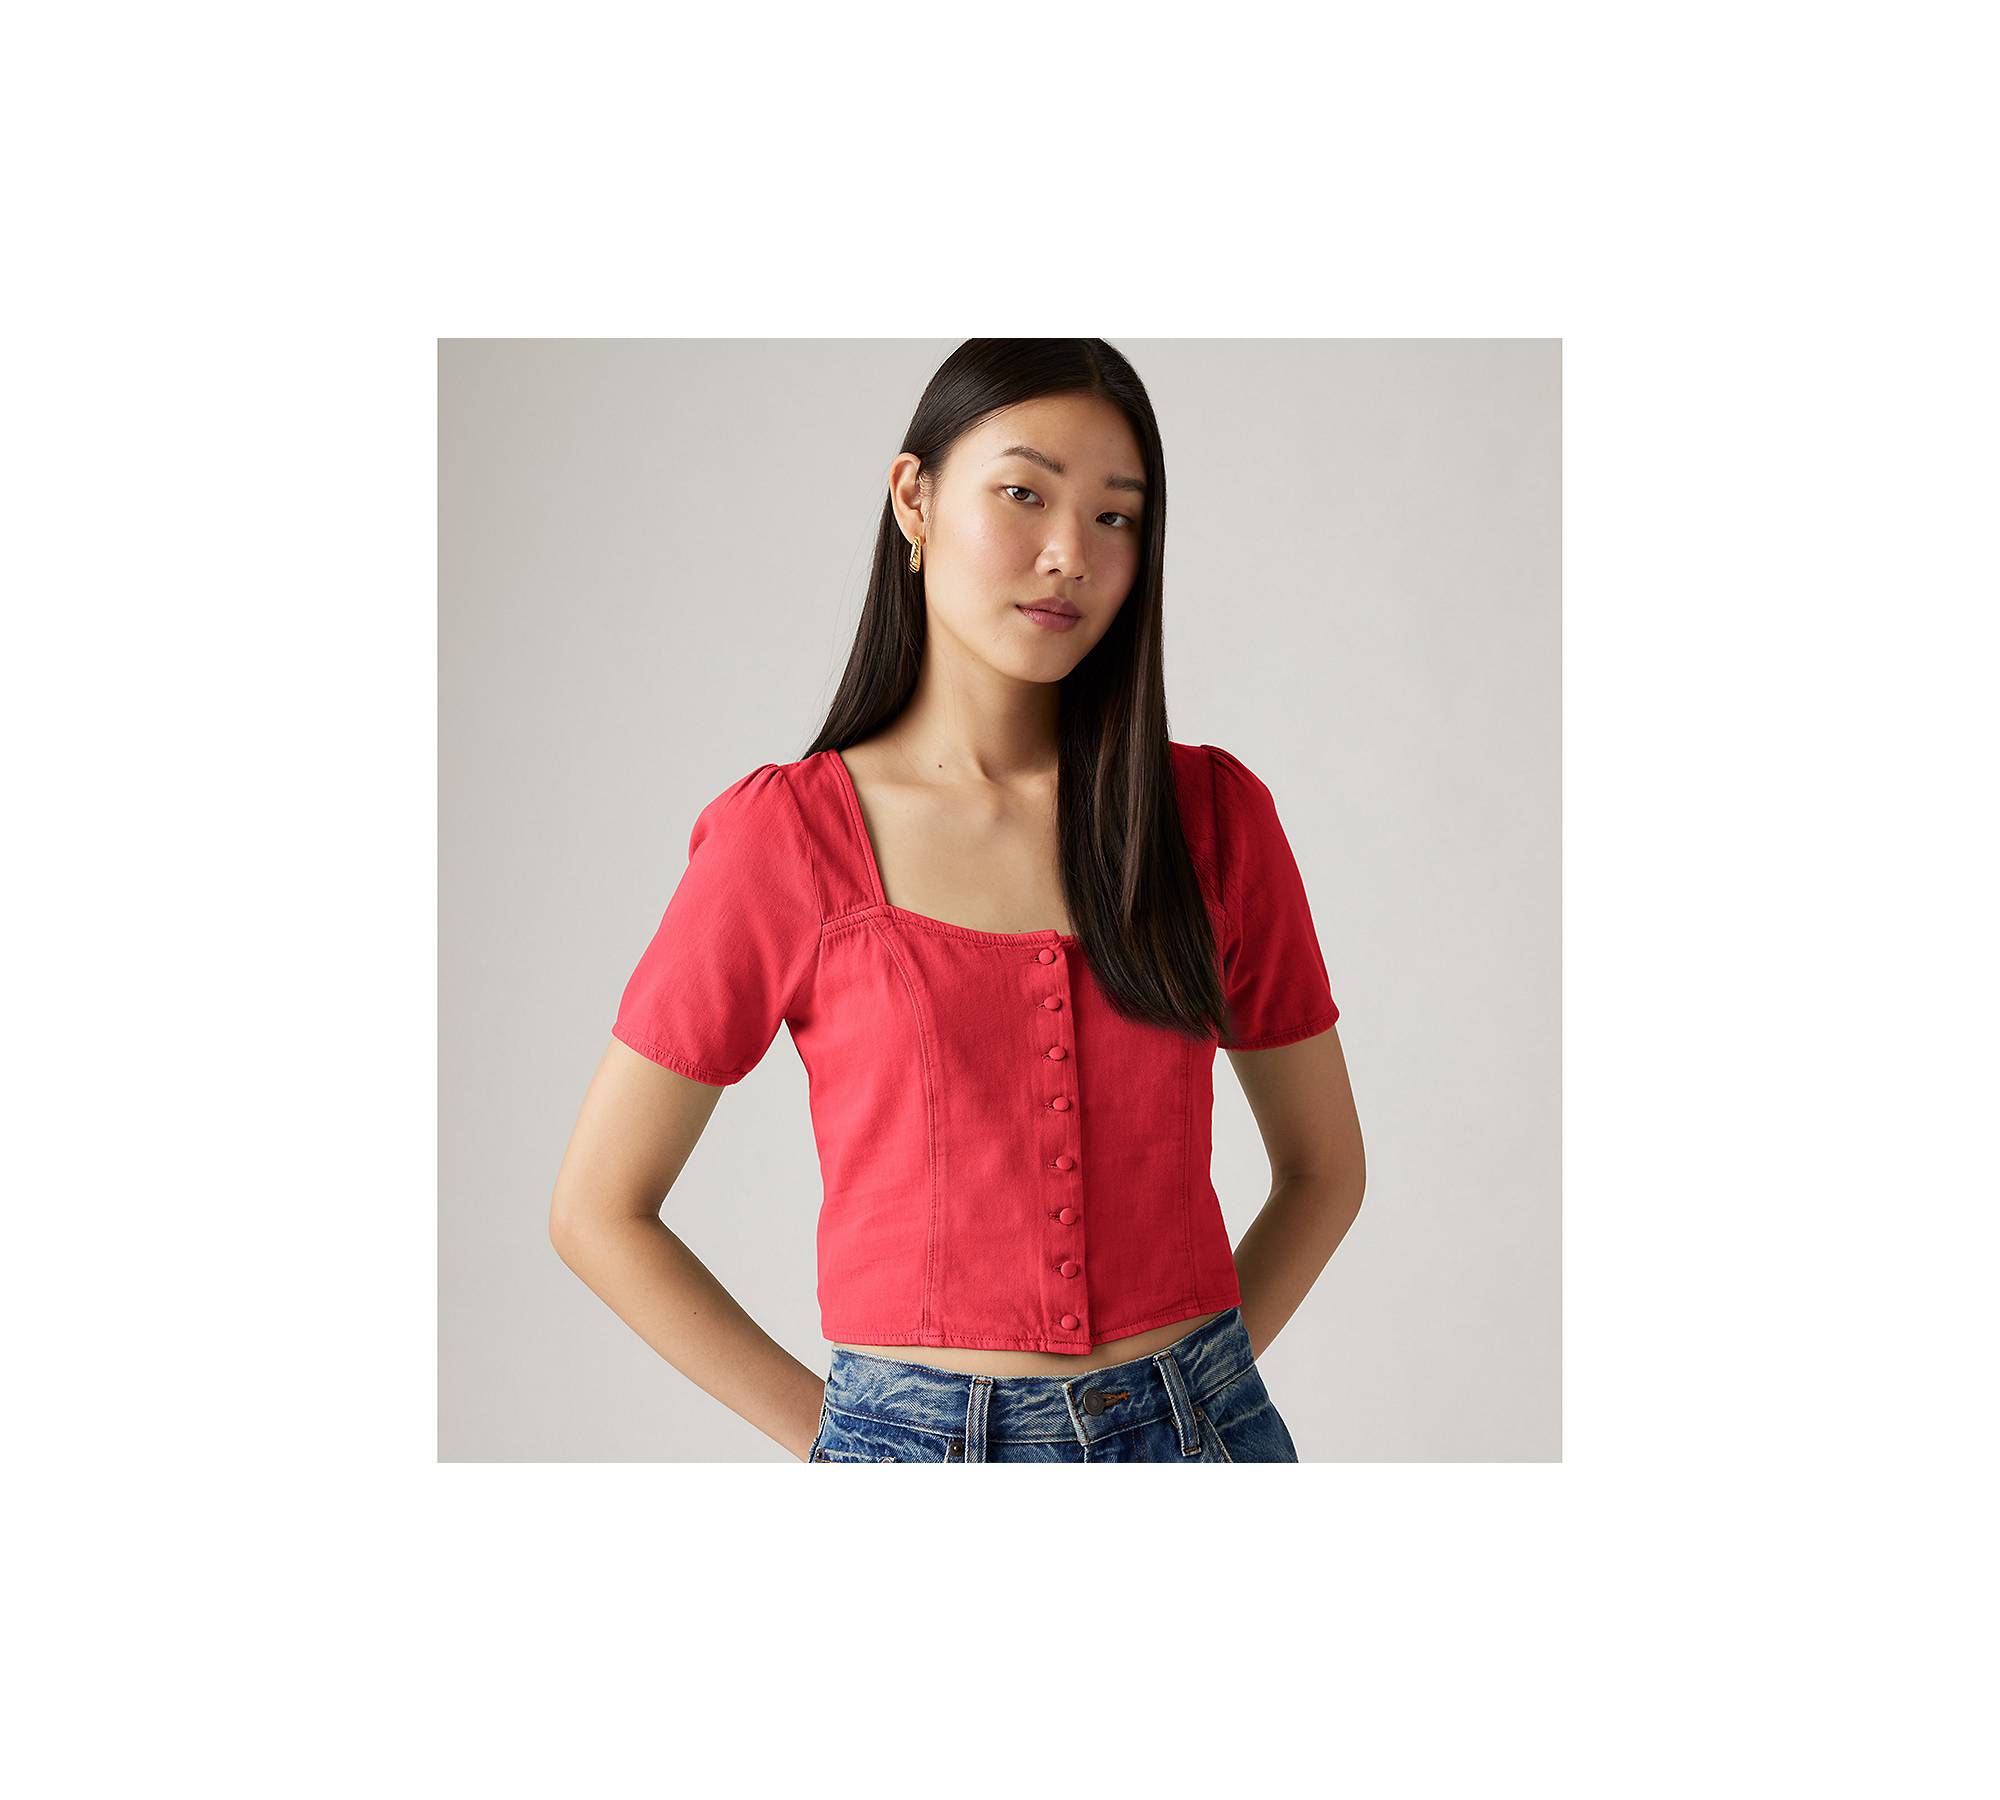 LWZWM Women's Plus Size Top Rockabilly Sweatshirt Short Sleeve Plunging  Neckline Pink Sweet Print Top Summer Tops Tropical Tops Work out Shirts  Aesthetic Blouse 